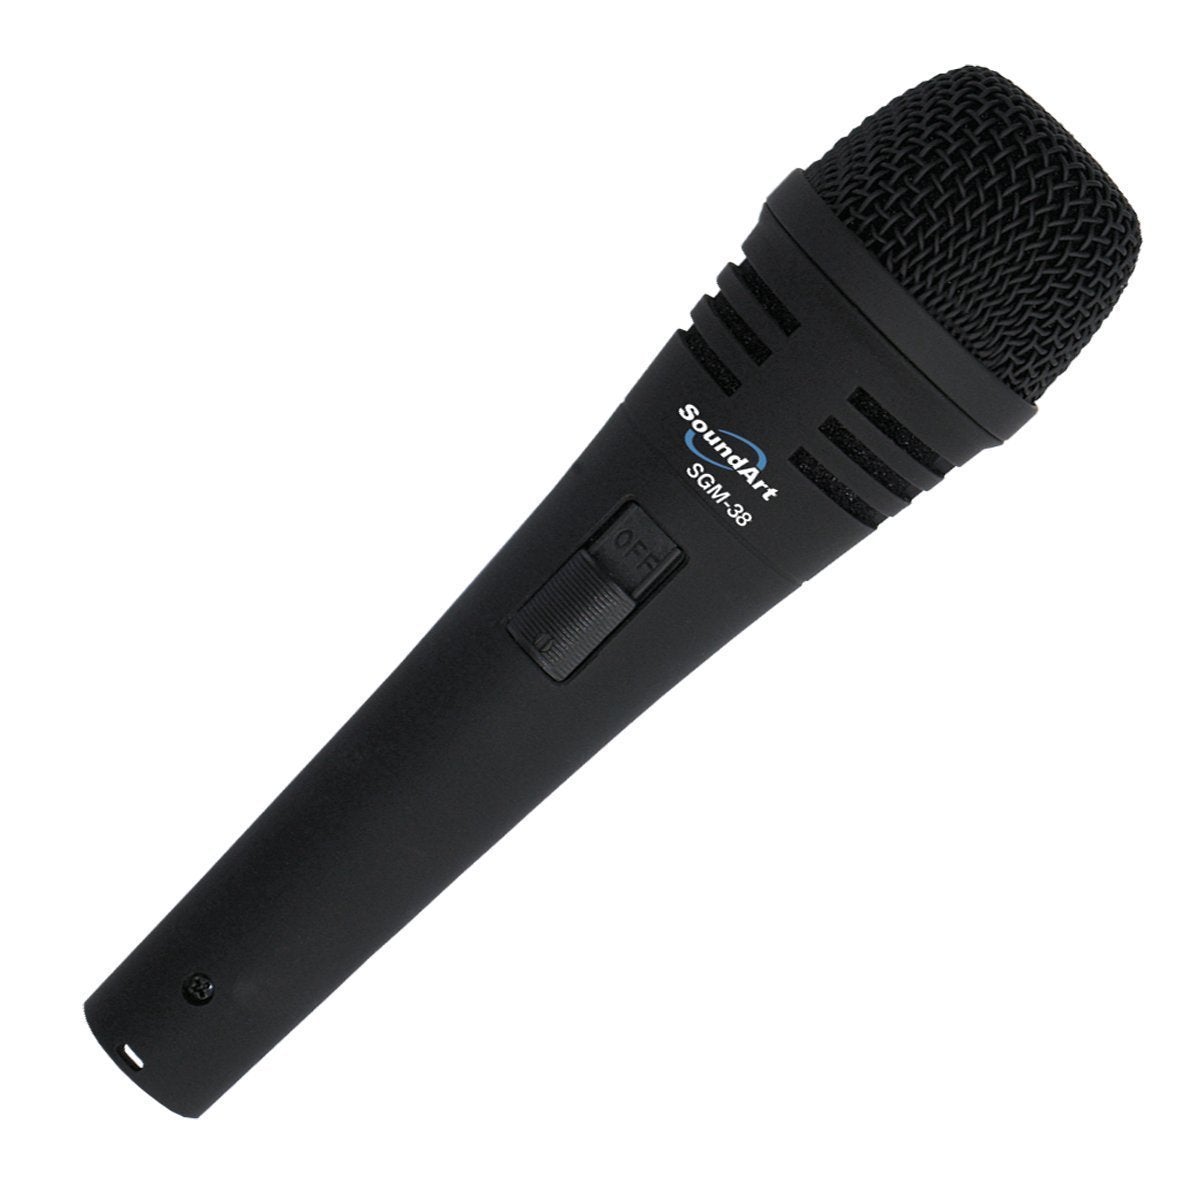 Microphone　Protective　with　SoundArt　Dynamic　jademcaustralia　SGM-38　–　Hand-Held　Bag